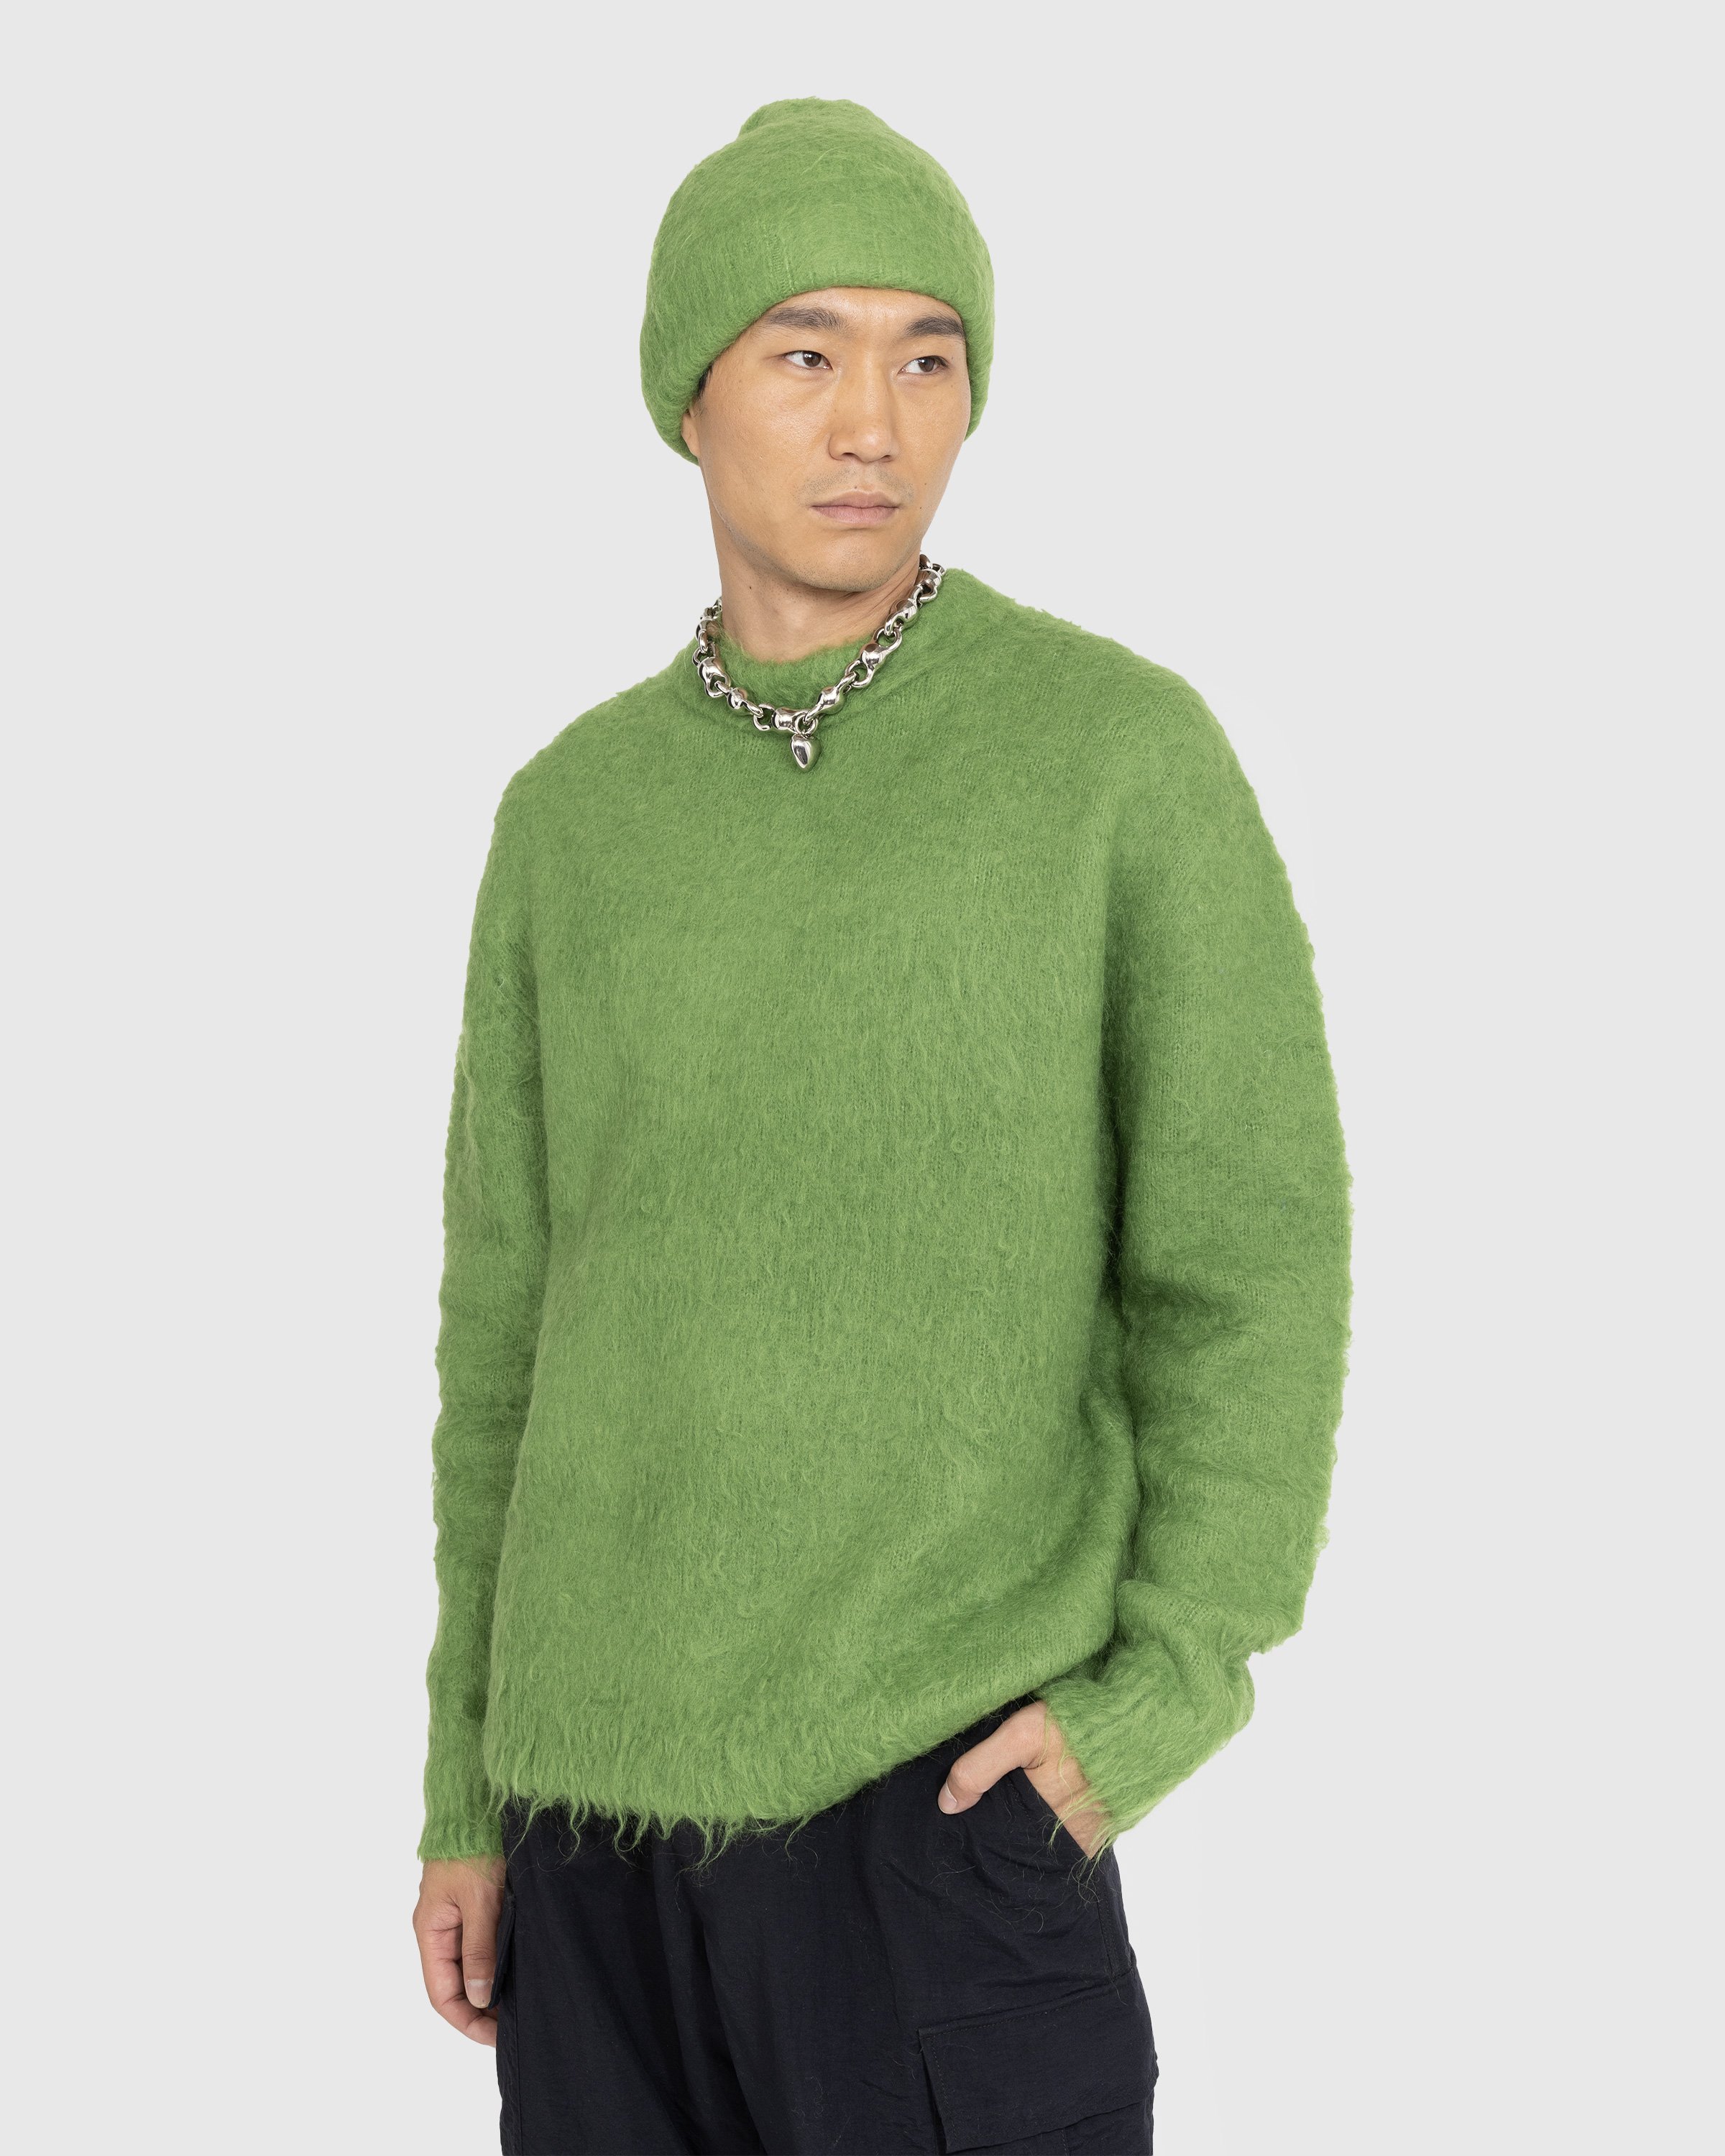 Acne Studios - Hair Crewneck Sweater Pear Green - Clothing - Green - Image 2